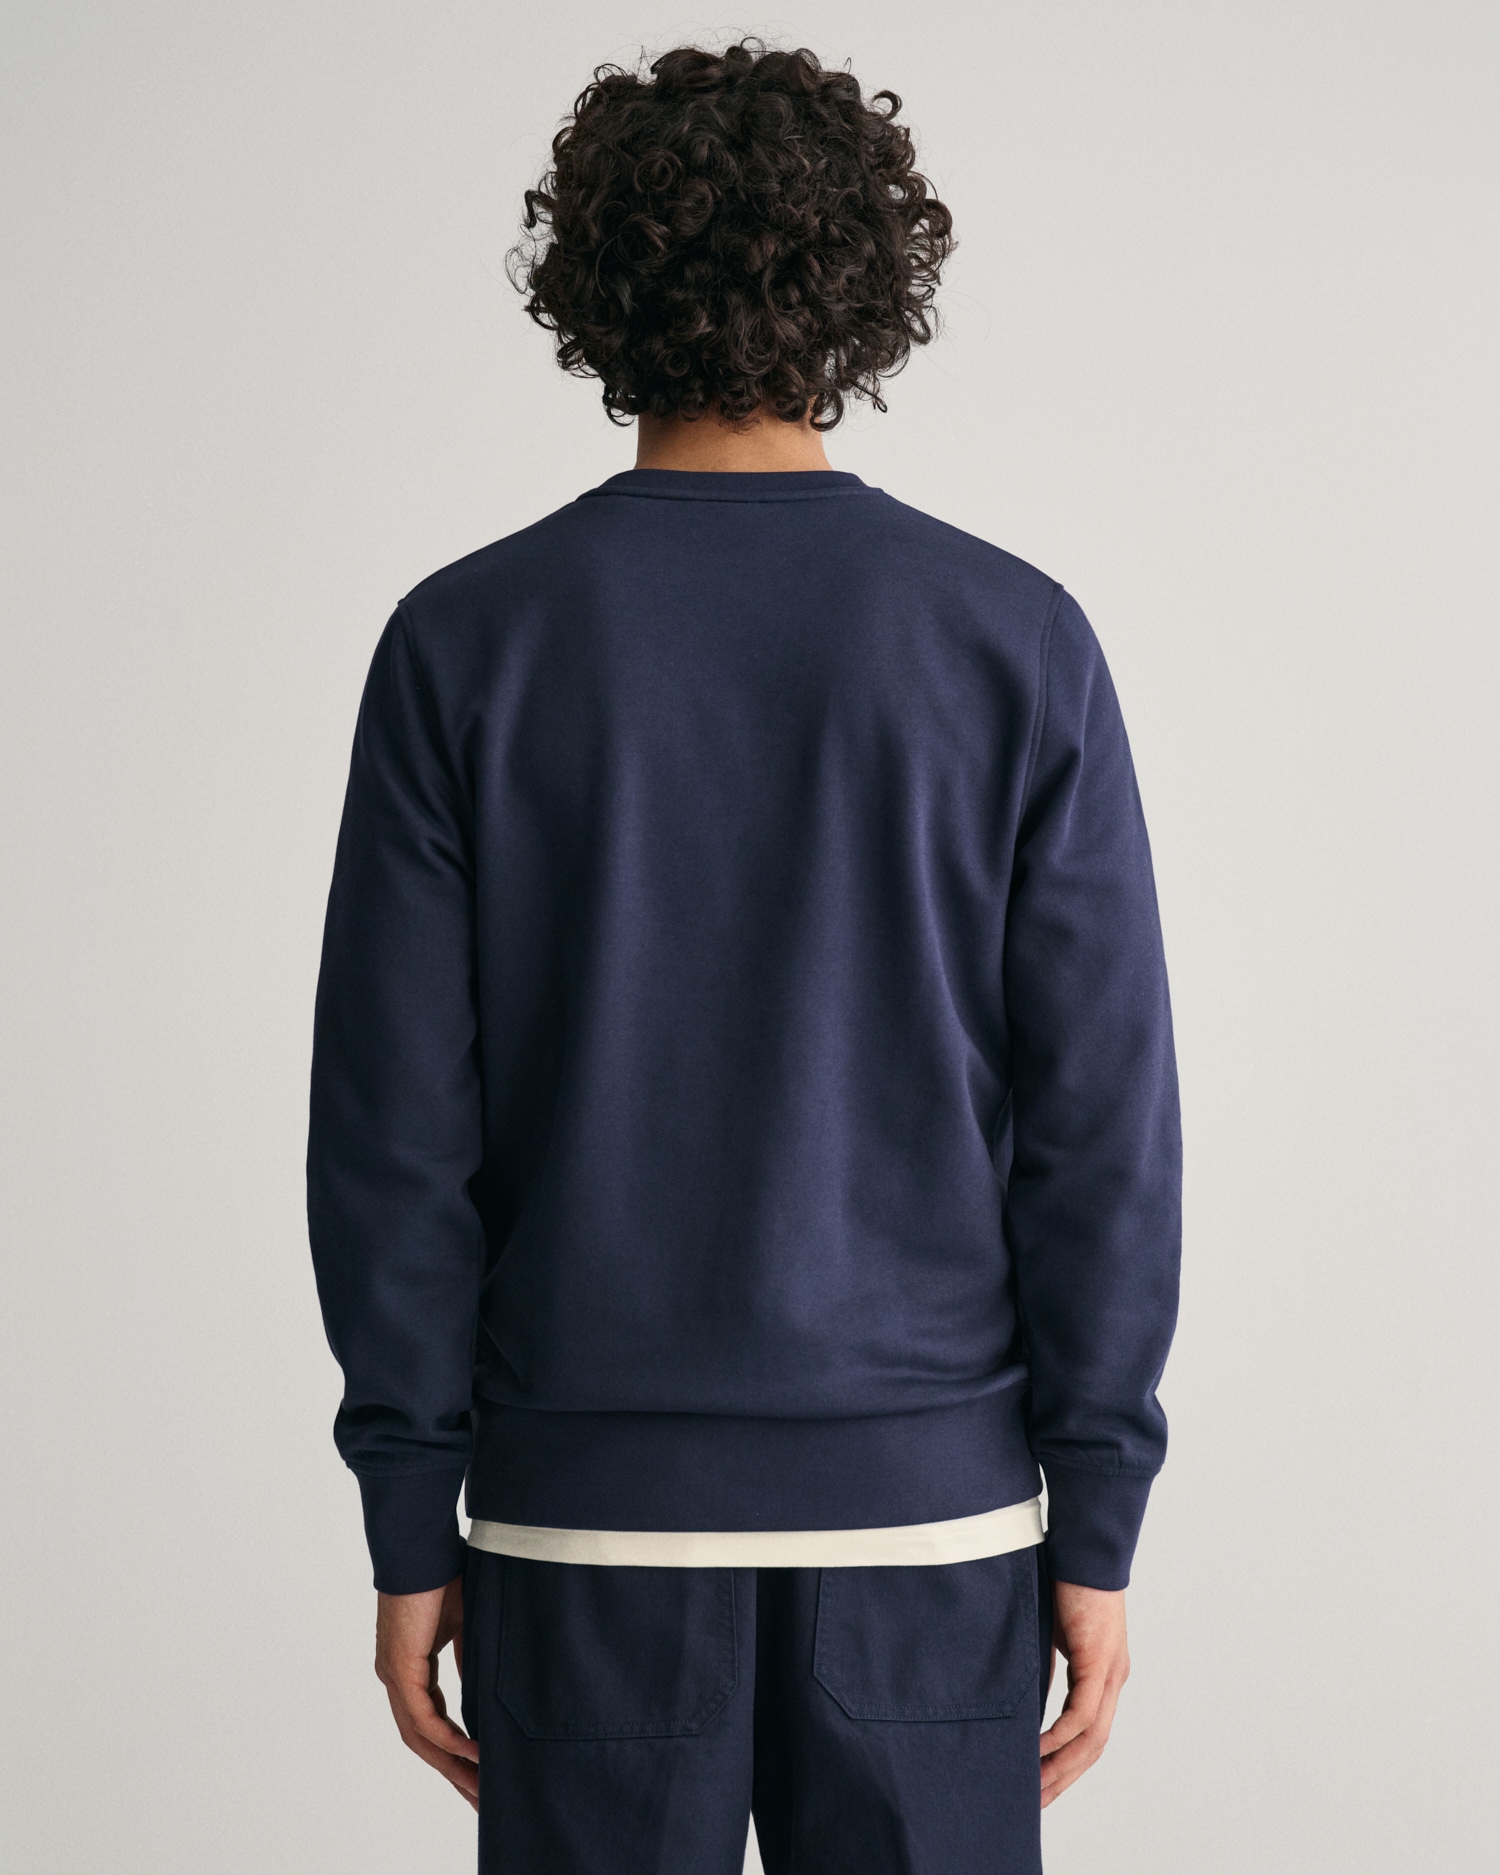 Gant Sweatshirt »PRINTED GRAPHIC C-NECK SWEAT«